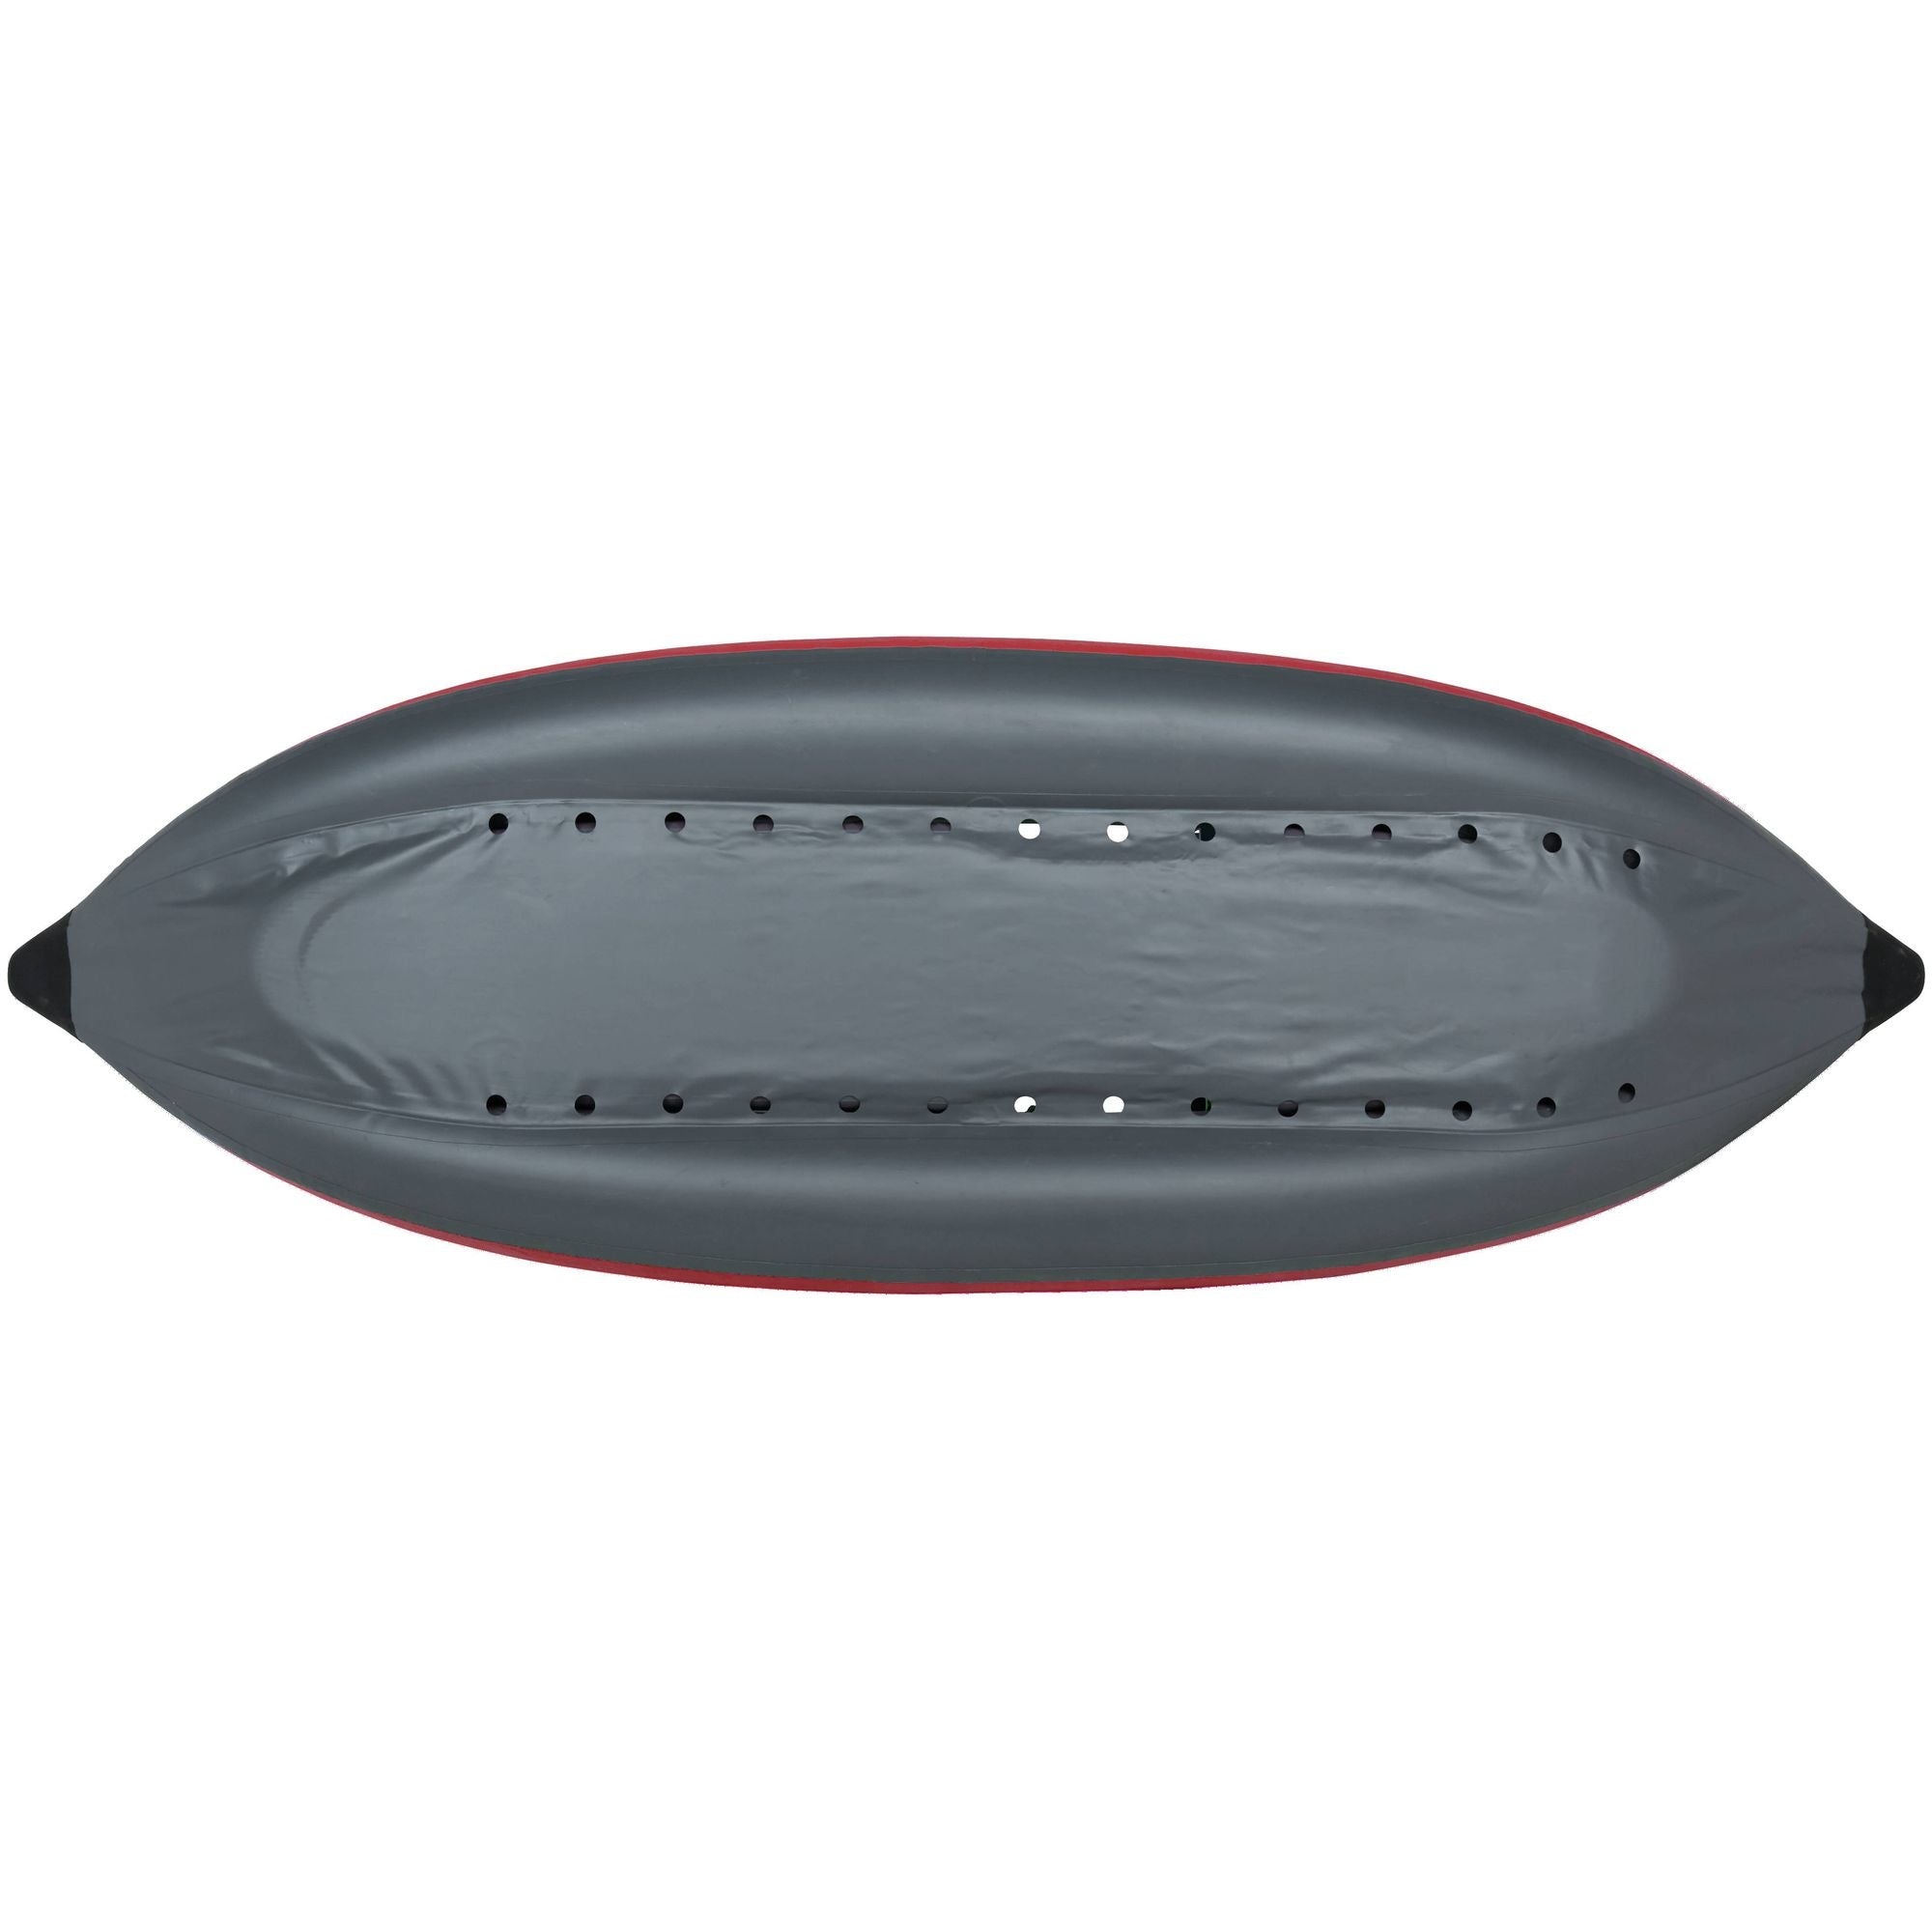 STAR - Raven I Pro Inflatable Kayak